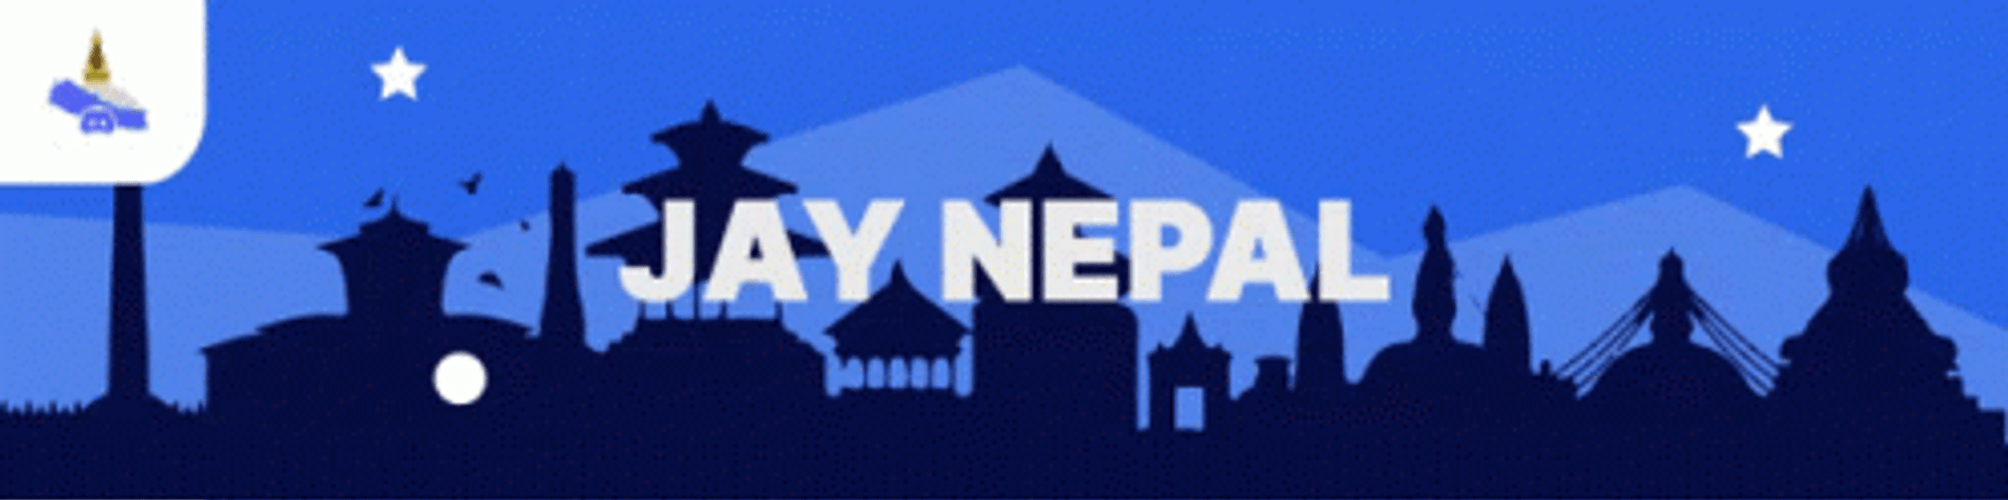 Jay Nepal Poster Gif